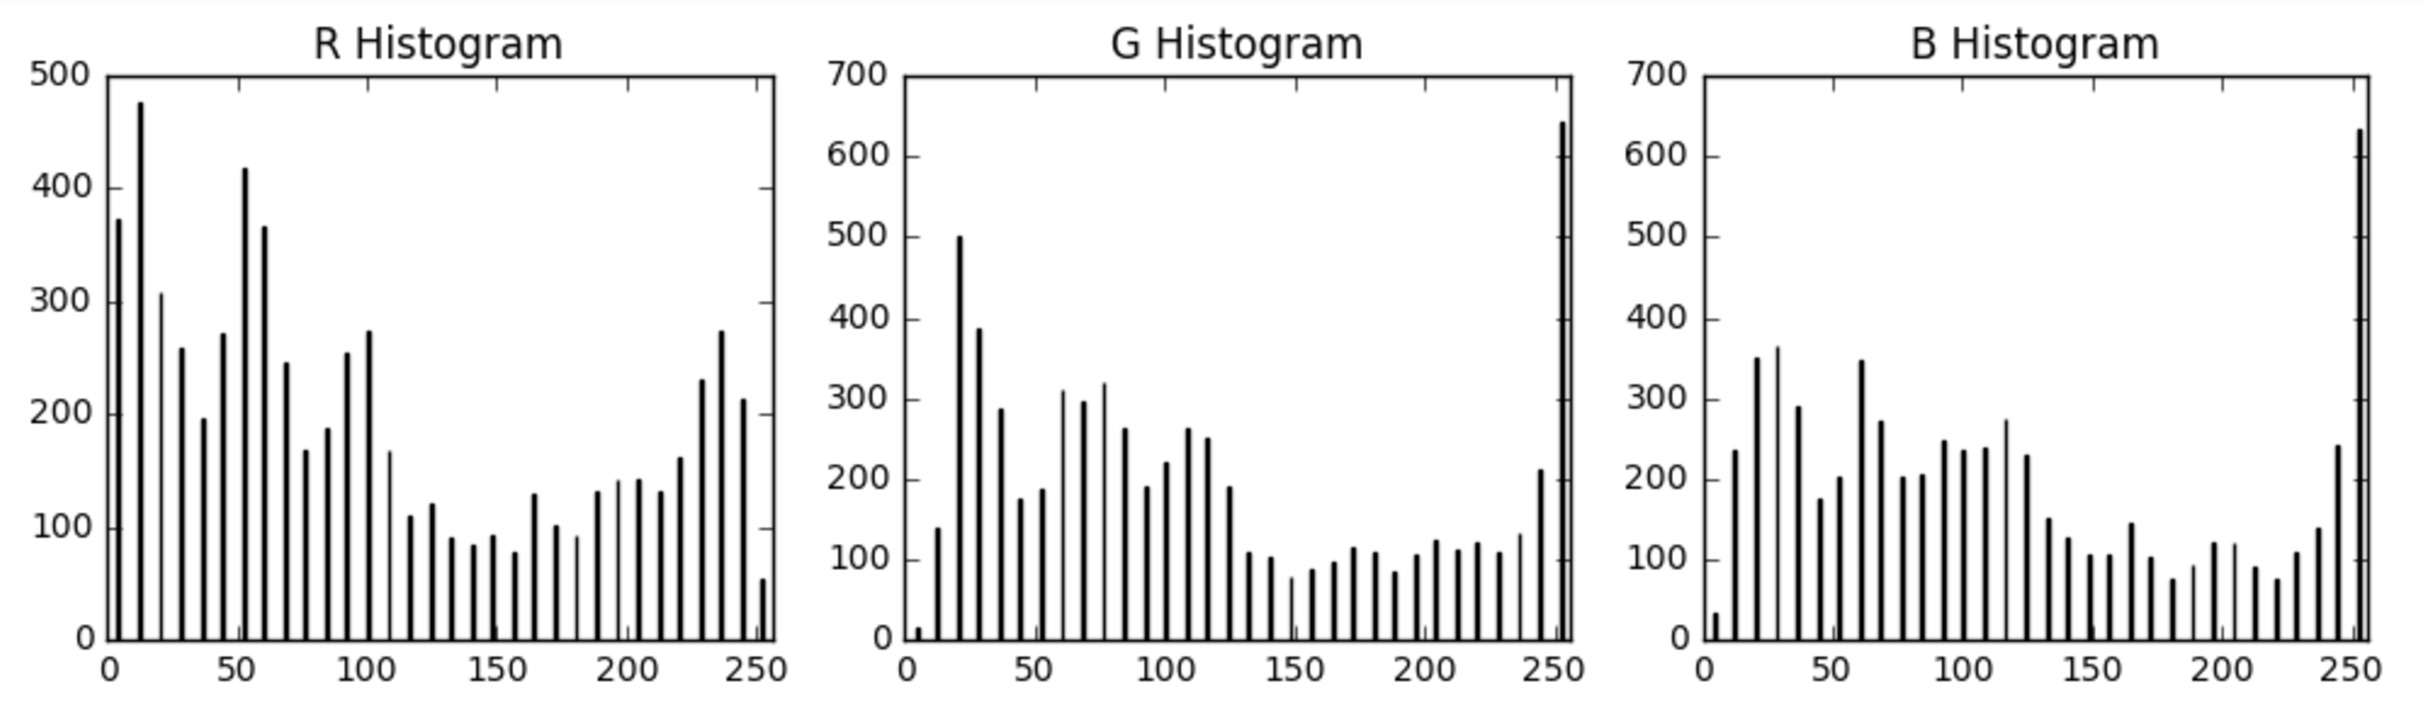 rgb-histogram-plot.jpg